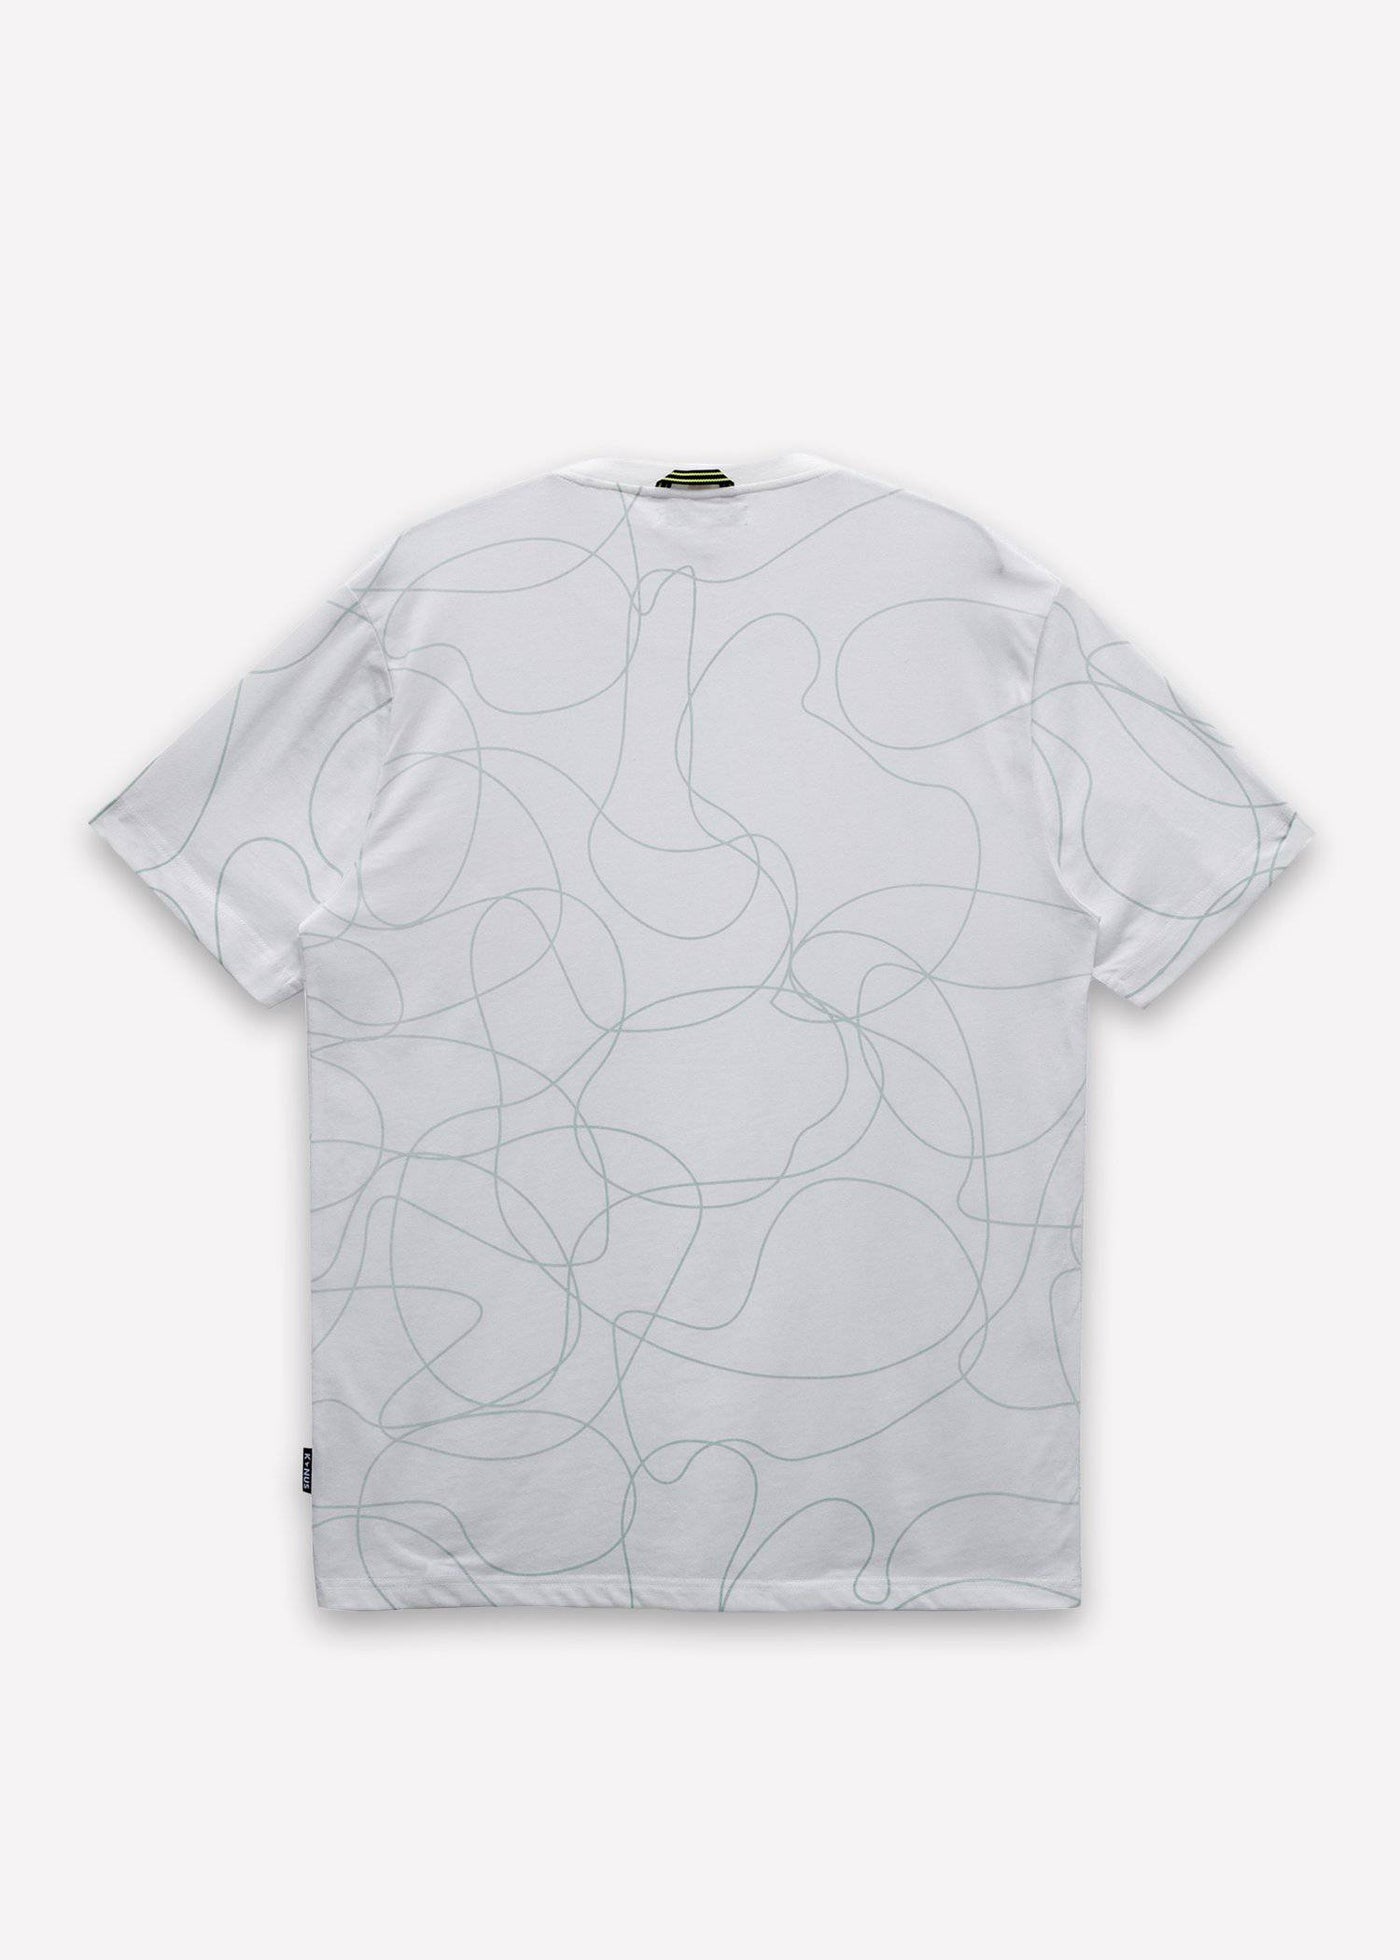 Konus Men's Linework Print T-shirt  in White by Shop at Konus